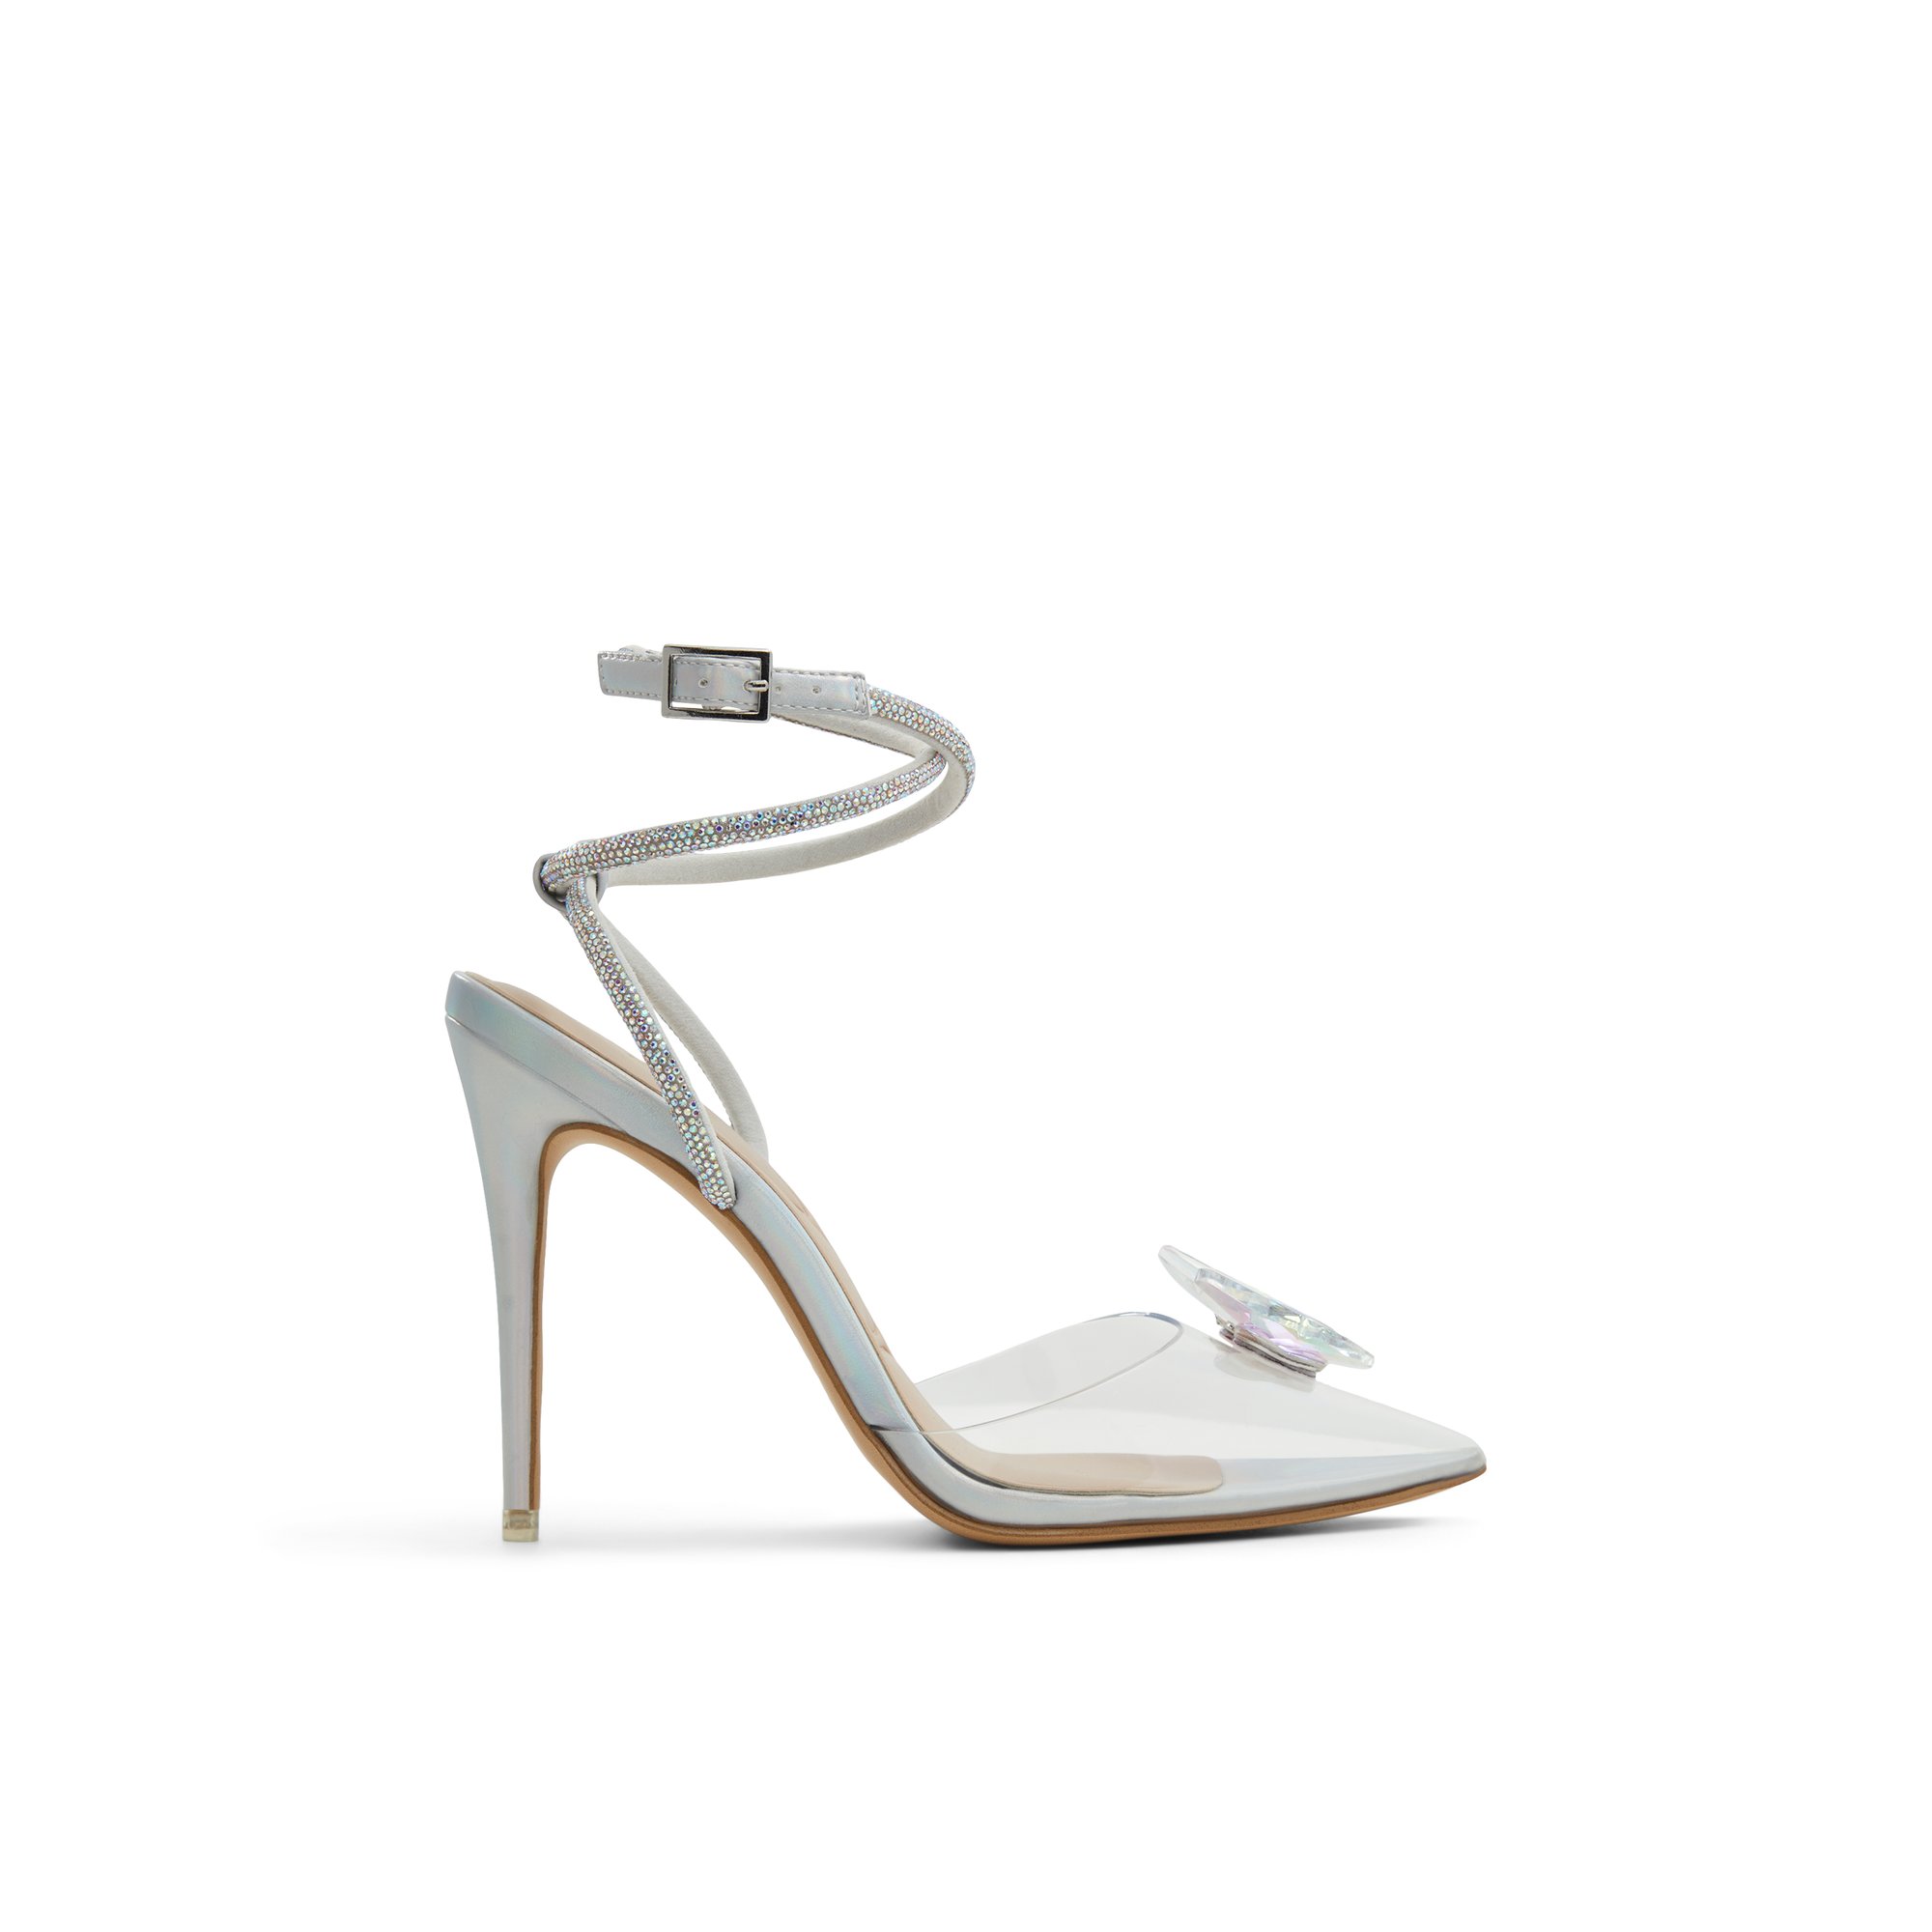 ALDO Chrysalis - Women's Sandals Strappy - Silver